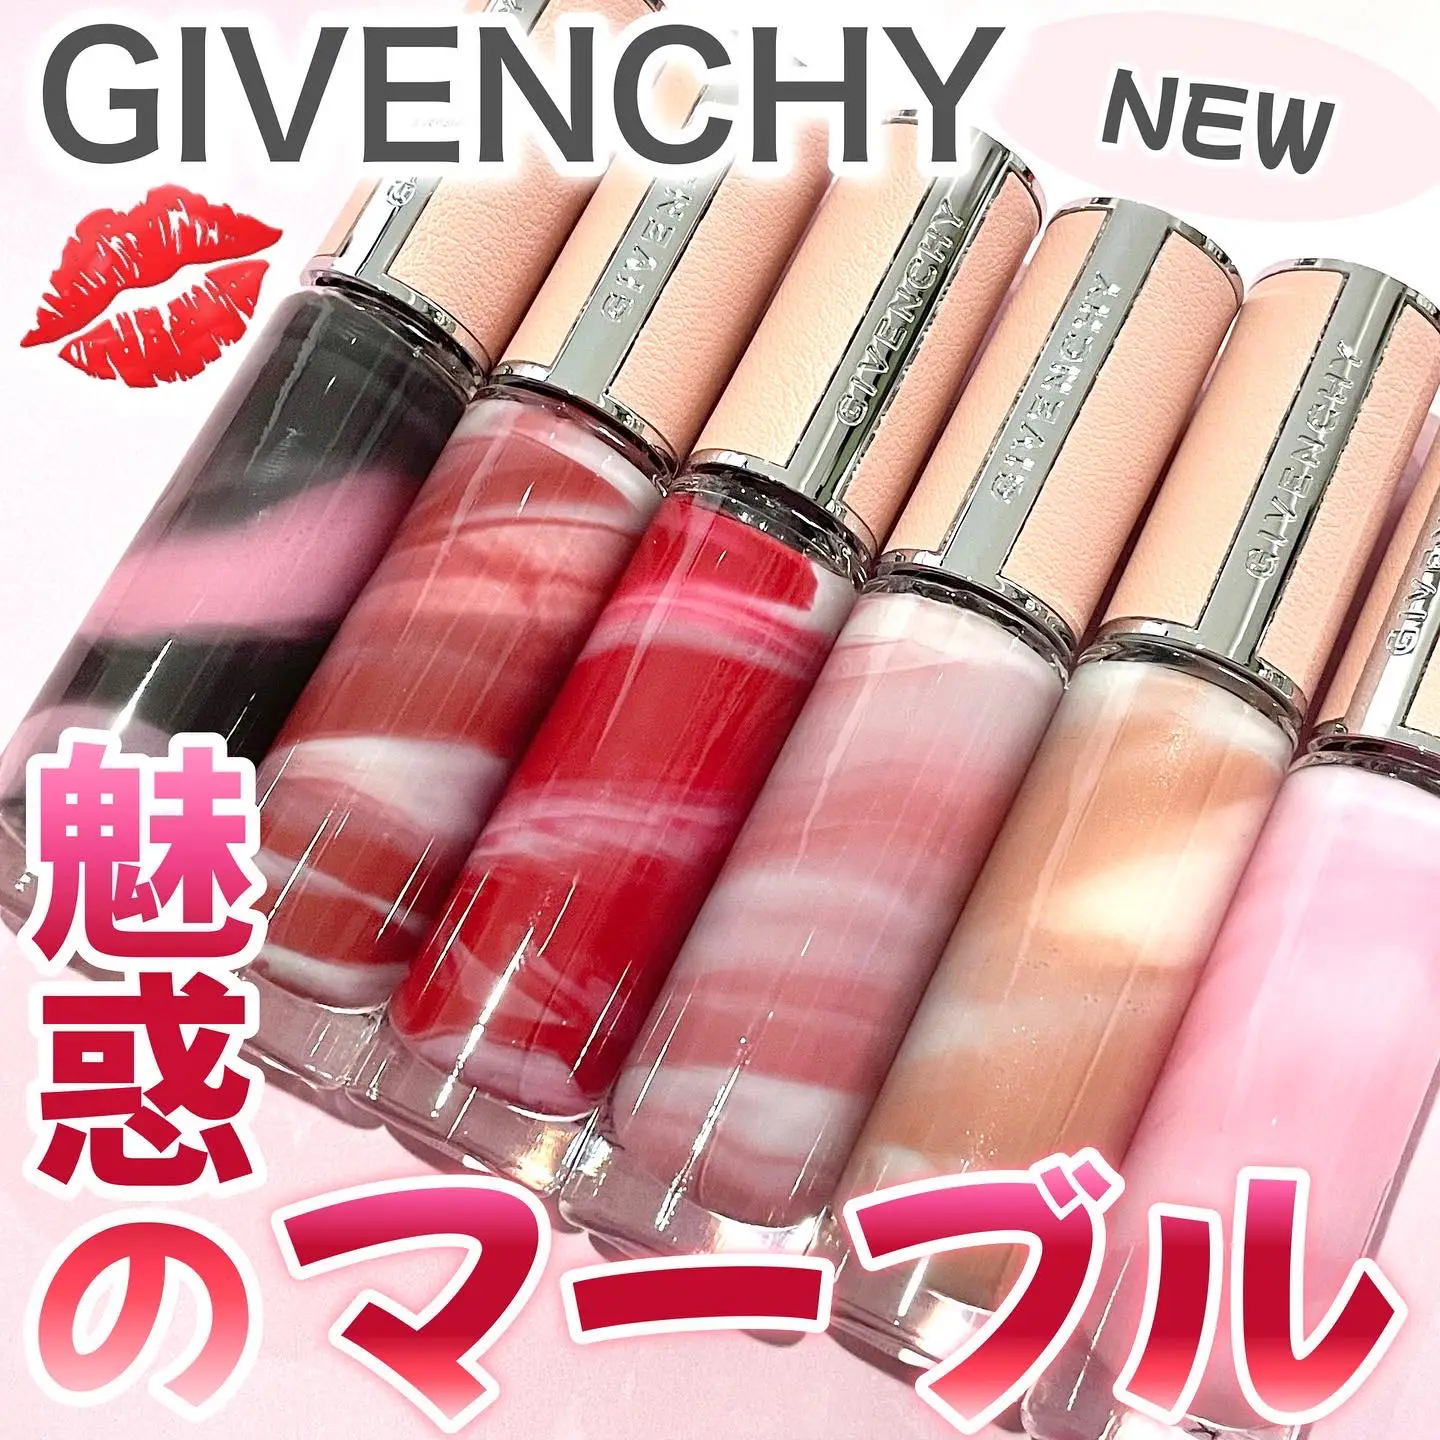 Givenchy's marble lip 